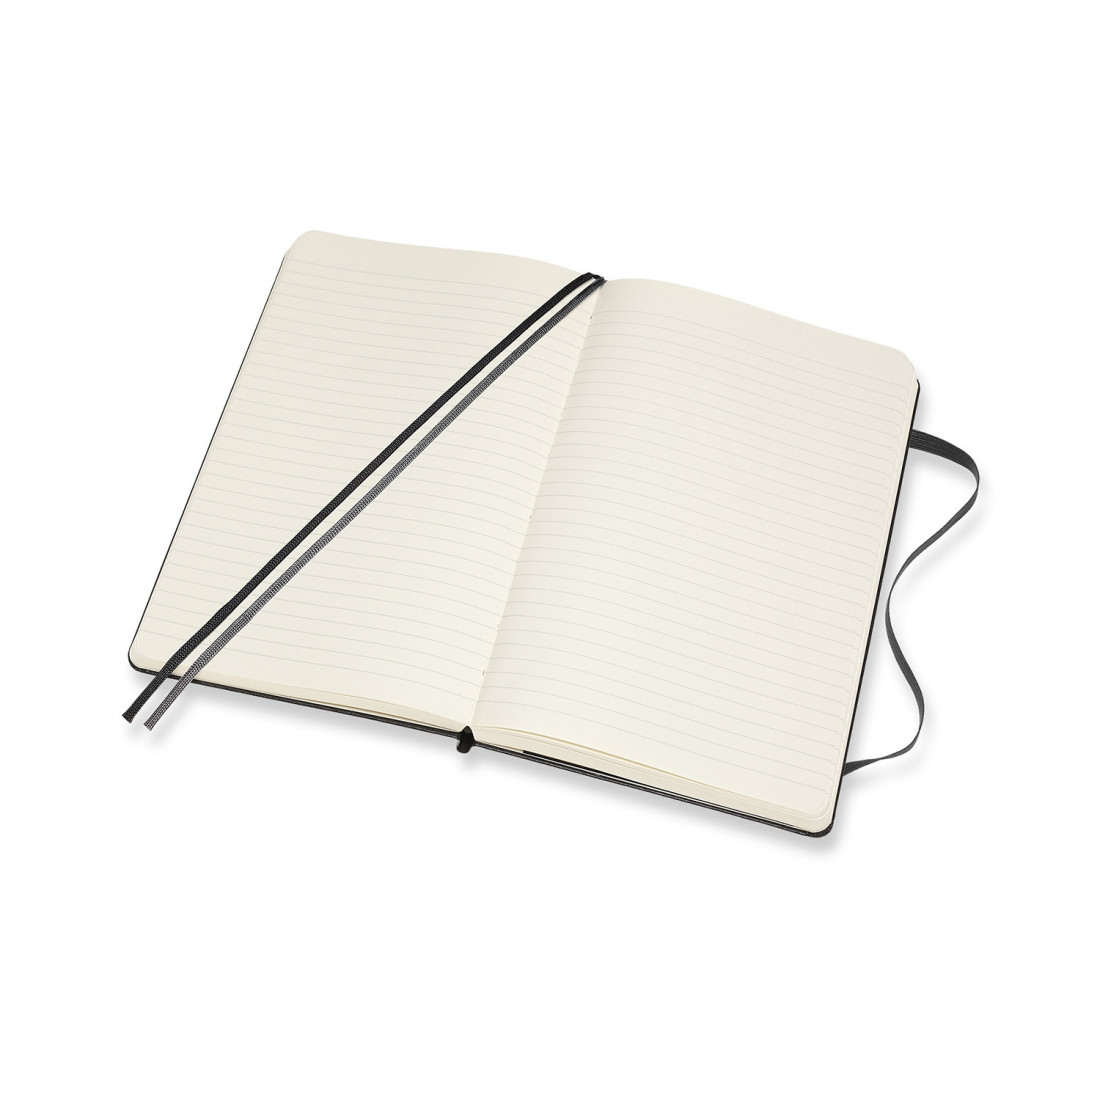 Notebook Large 13x21 Ruled Expanded Version Black Hard Cover Moleskine